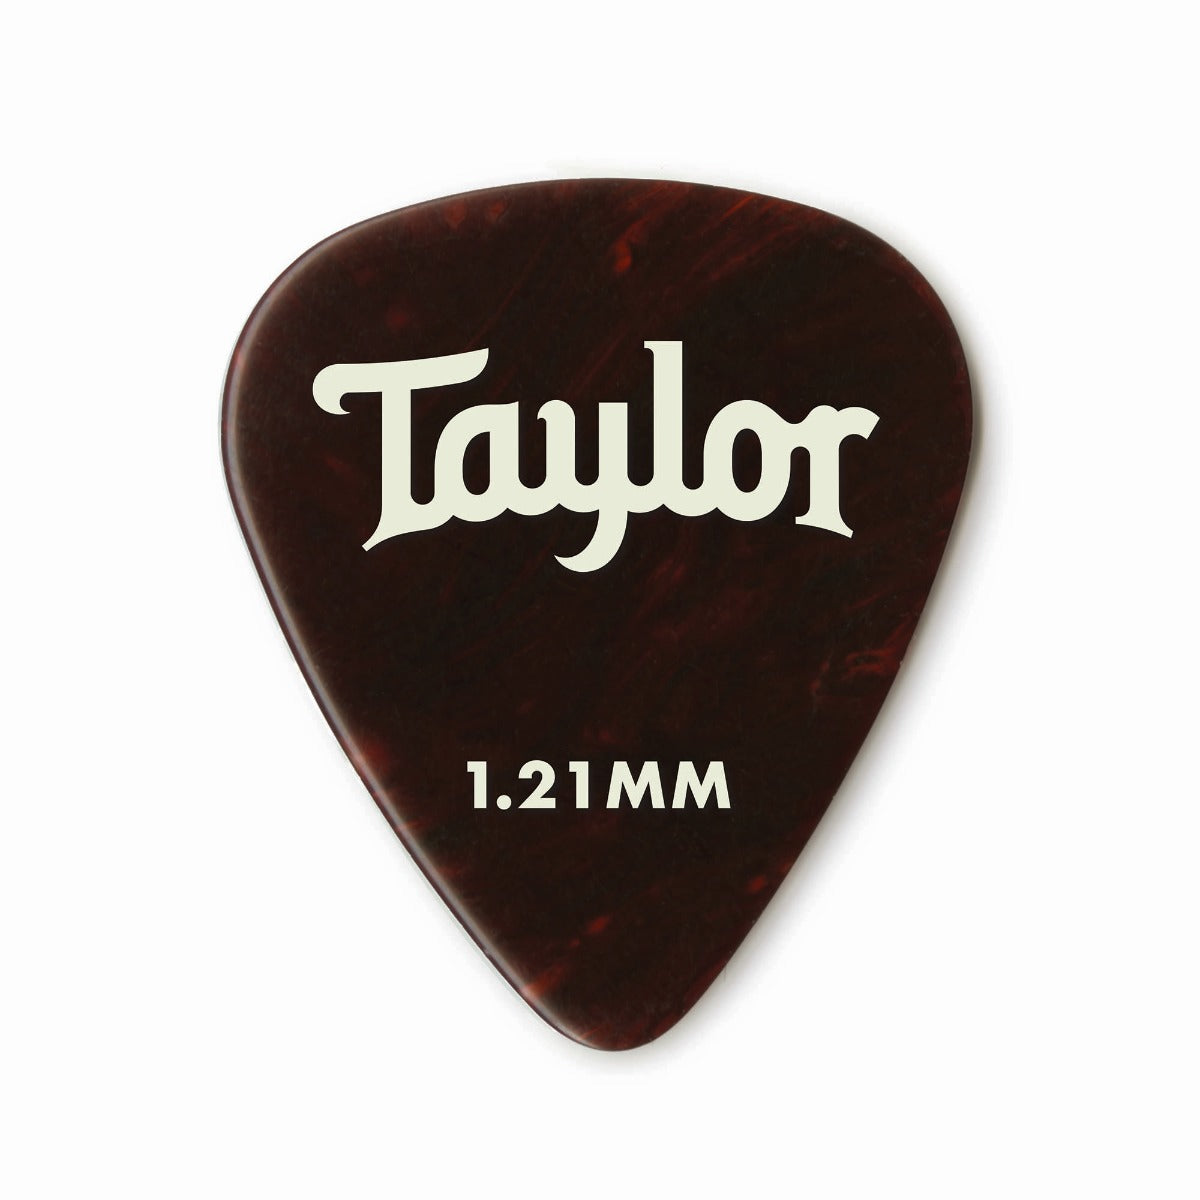 Taylor Celluloid 351 Guitar Picks, Tortoise Shell 1.21mm - 12pk 